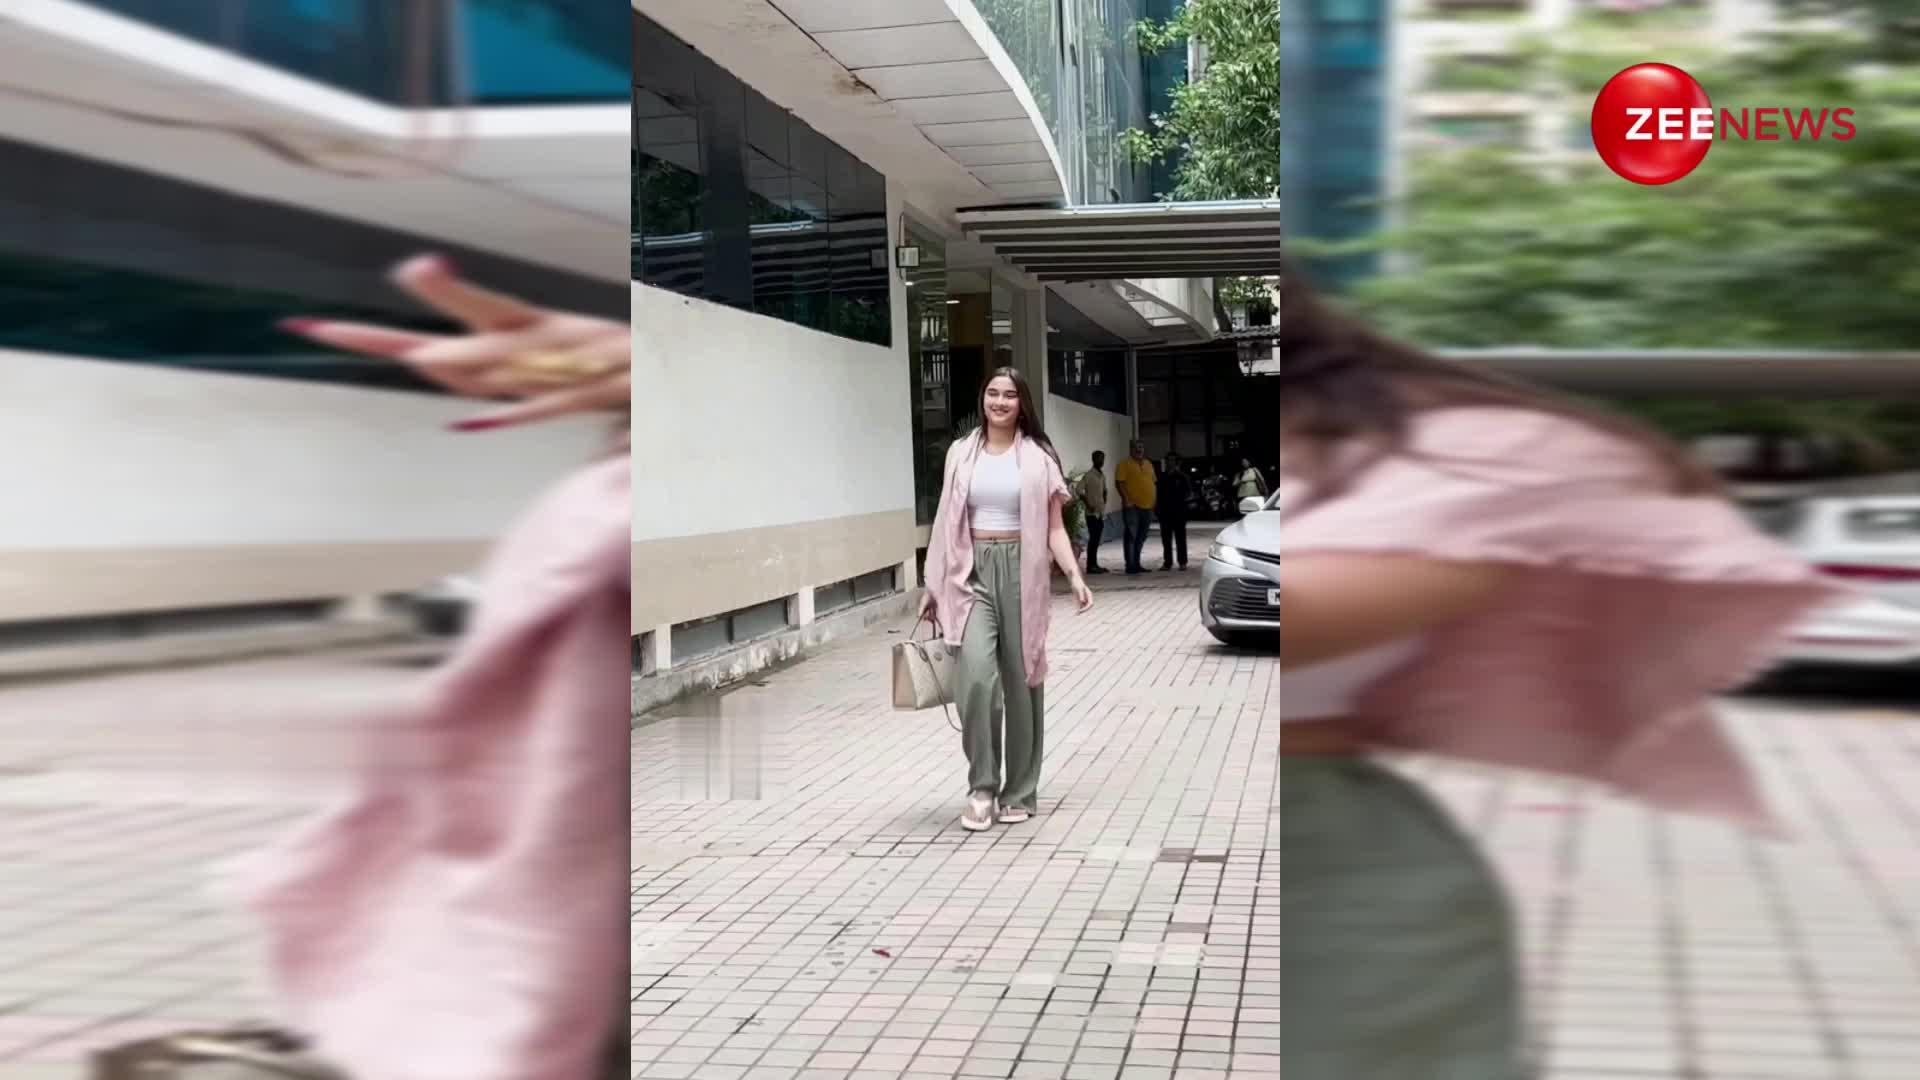 hot saiee manjrekar showed cute and sexy poses video went viral